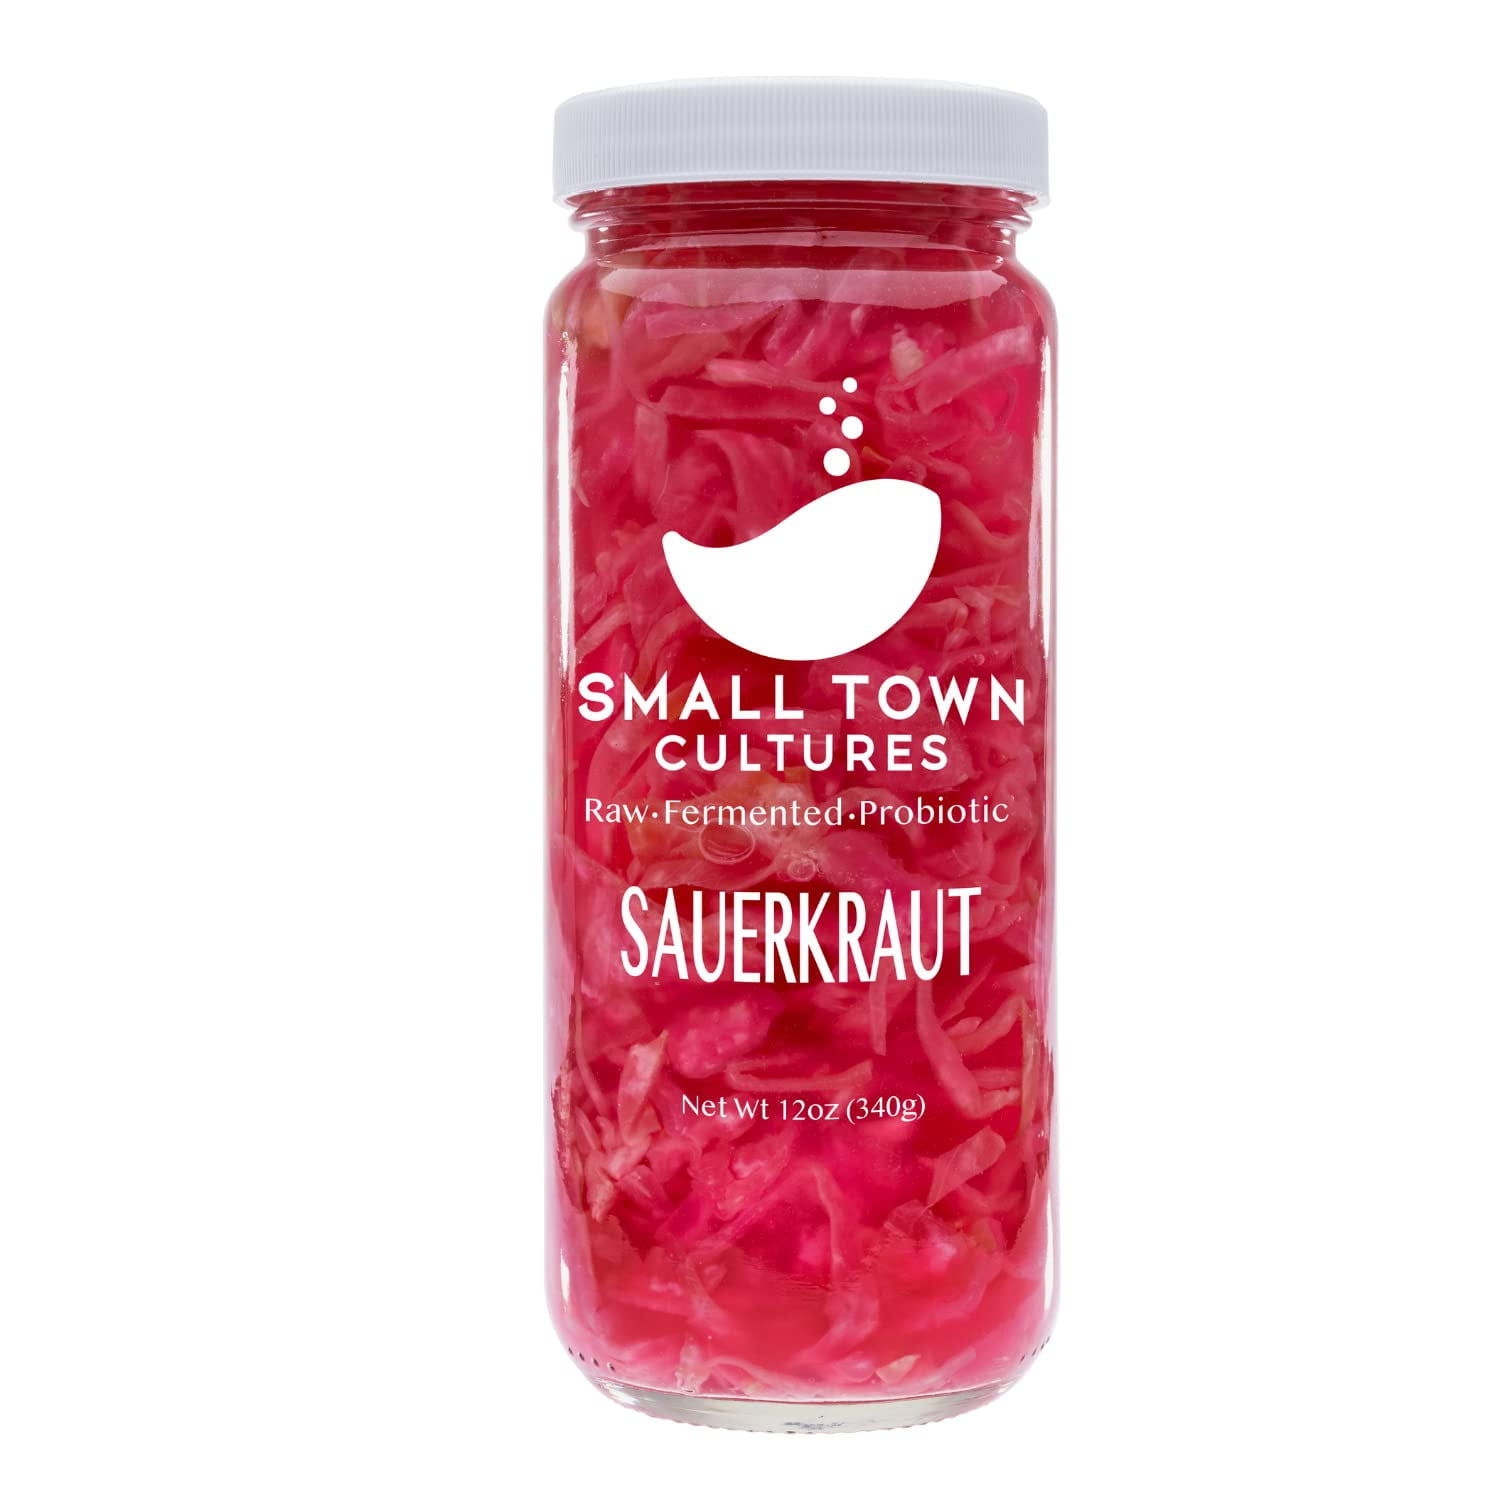 Where Is Sauerkraut In Walmart? + Other Grocery Stores